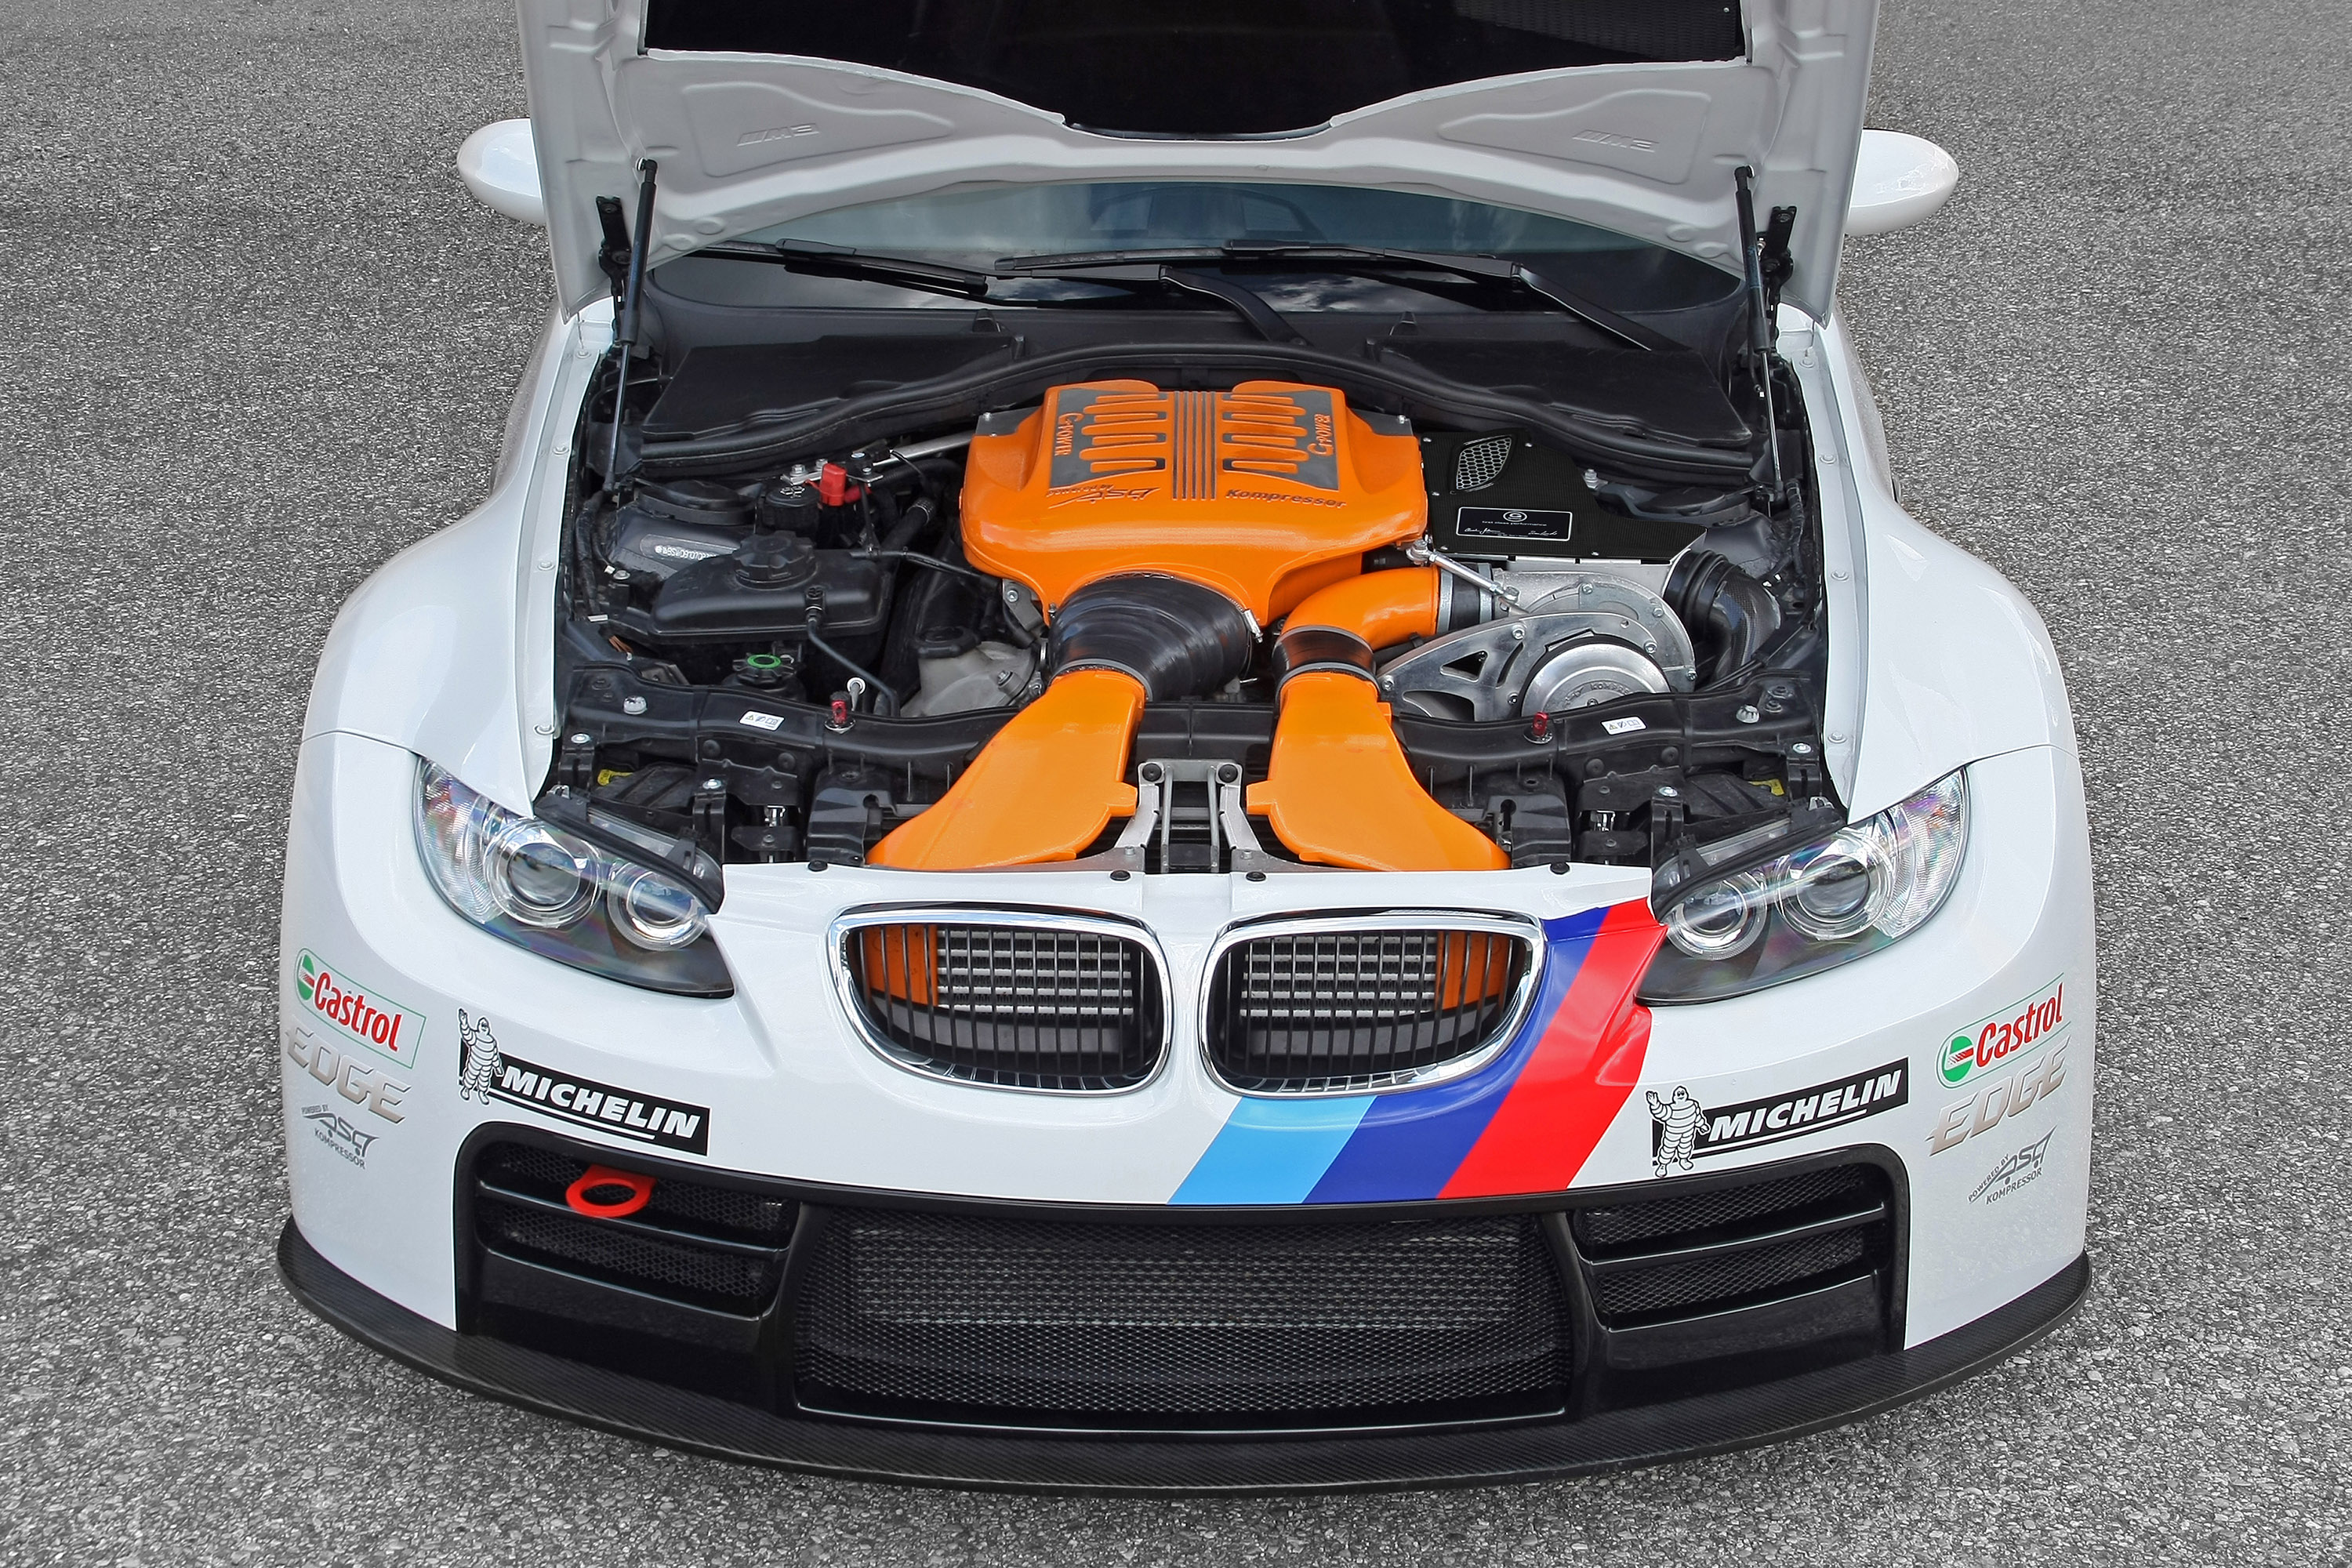 Тюнинг BMW M3